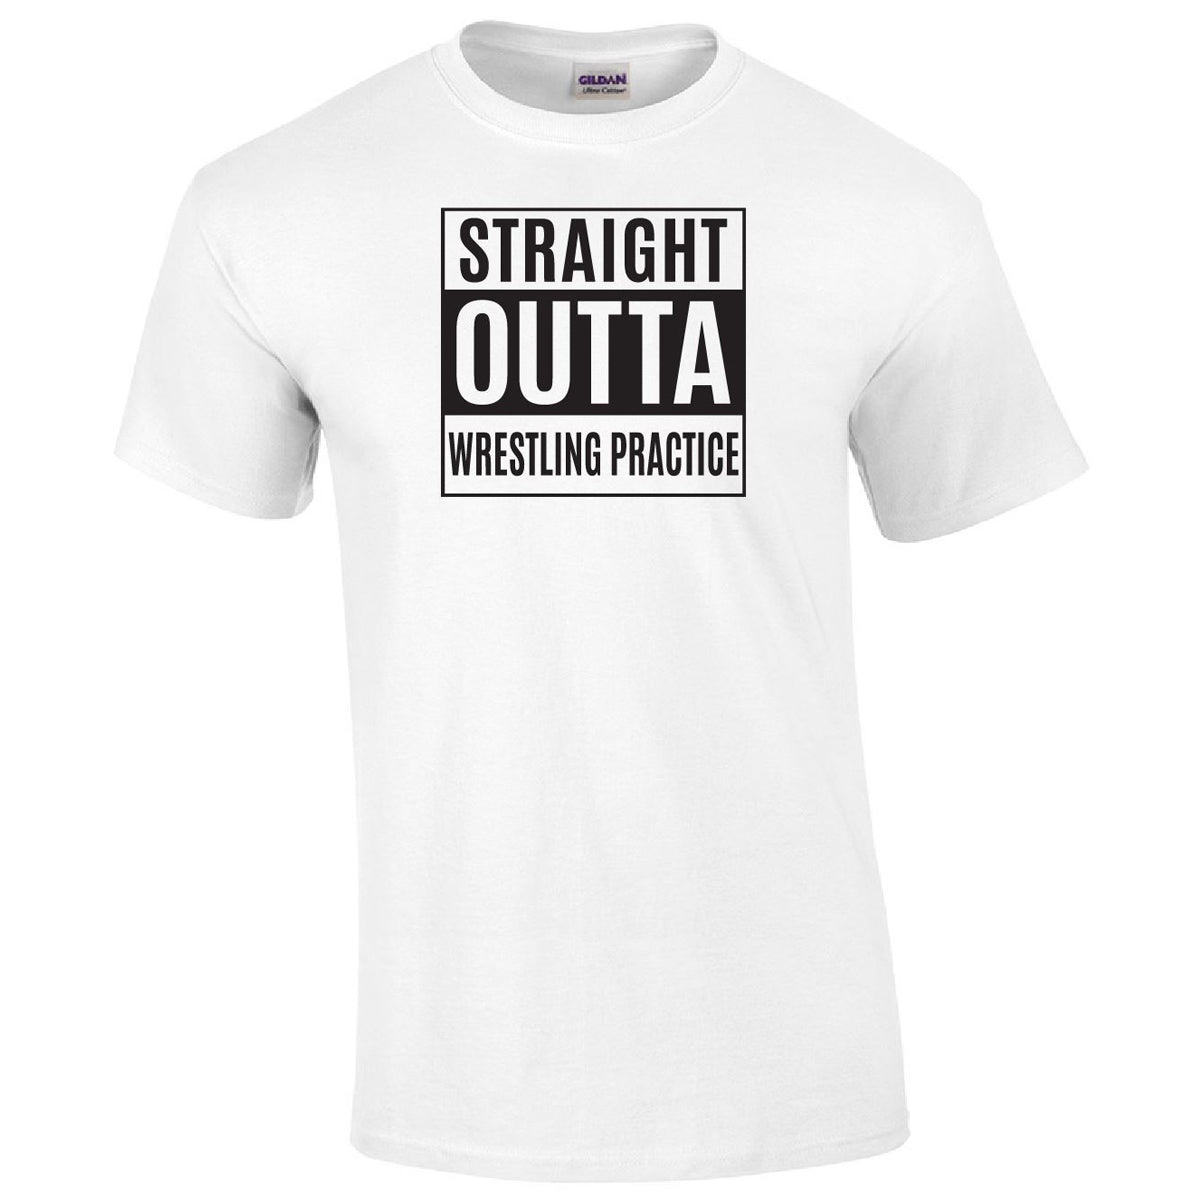 Straight Outta Wrestling Practice Printed Tee Humorous Shirt 411 Youth Medium White 